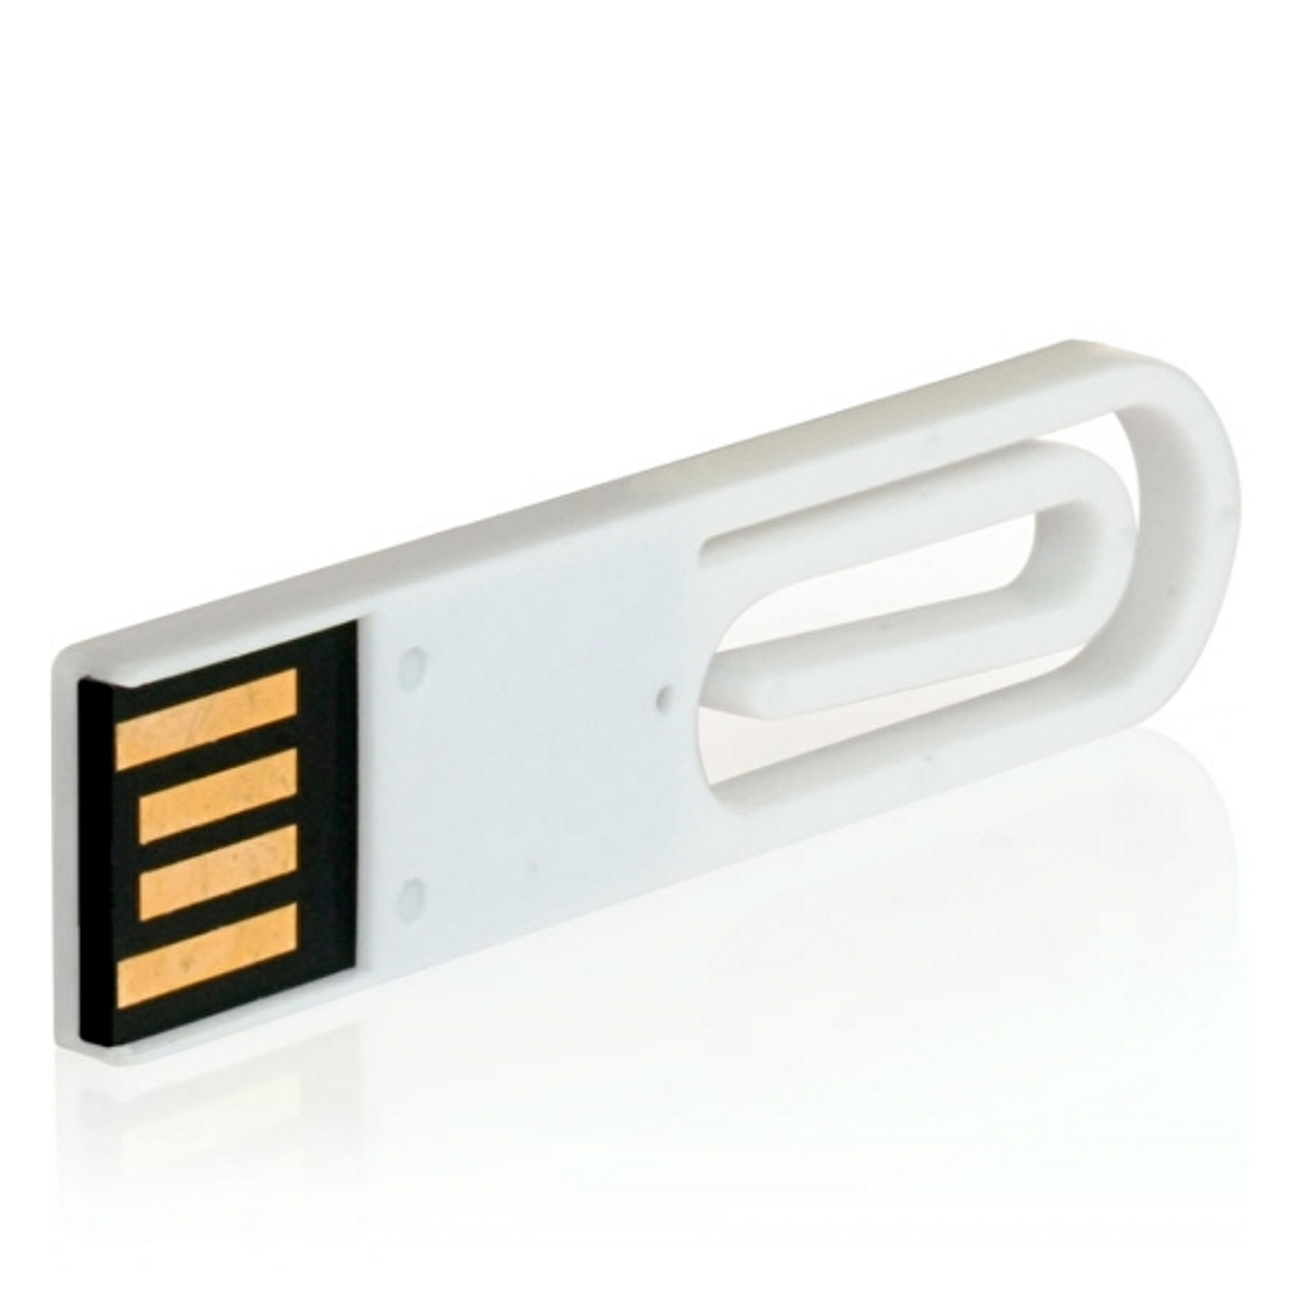 USB GERMANY ® GB) 8 USB-Stick eCLIP (Weiß